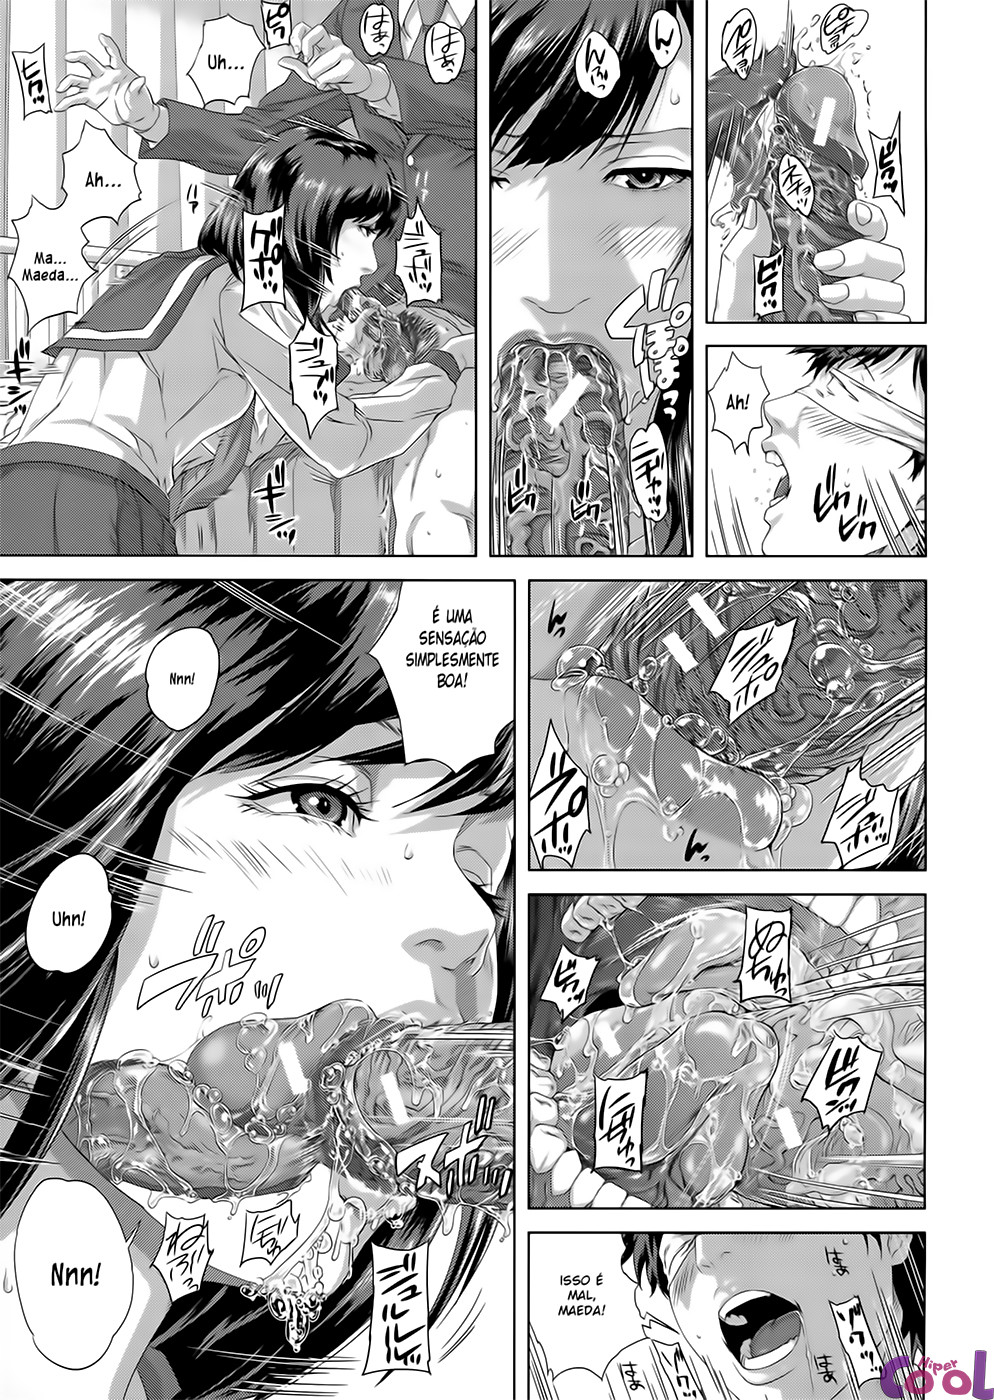 chiteki-koukishin-chapter-05-page-09.jpg